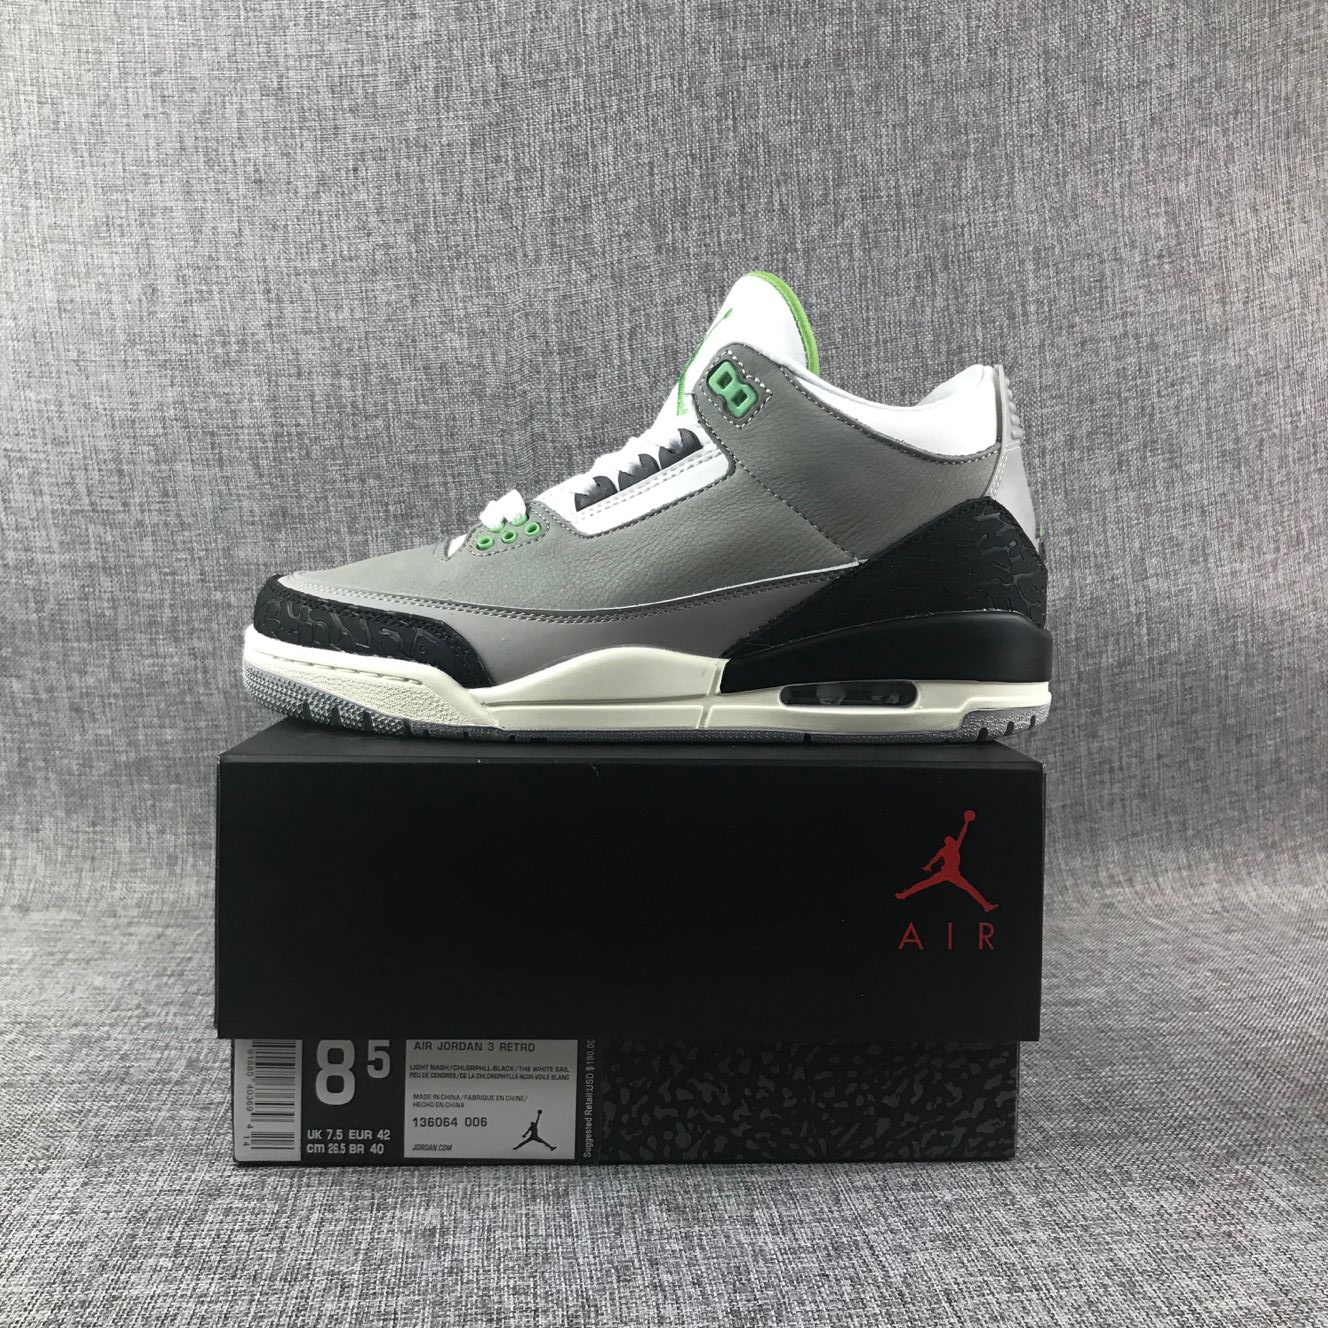 Air Jordan 3 Chlorophyll Green Black White Shoes